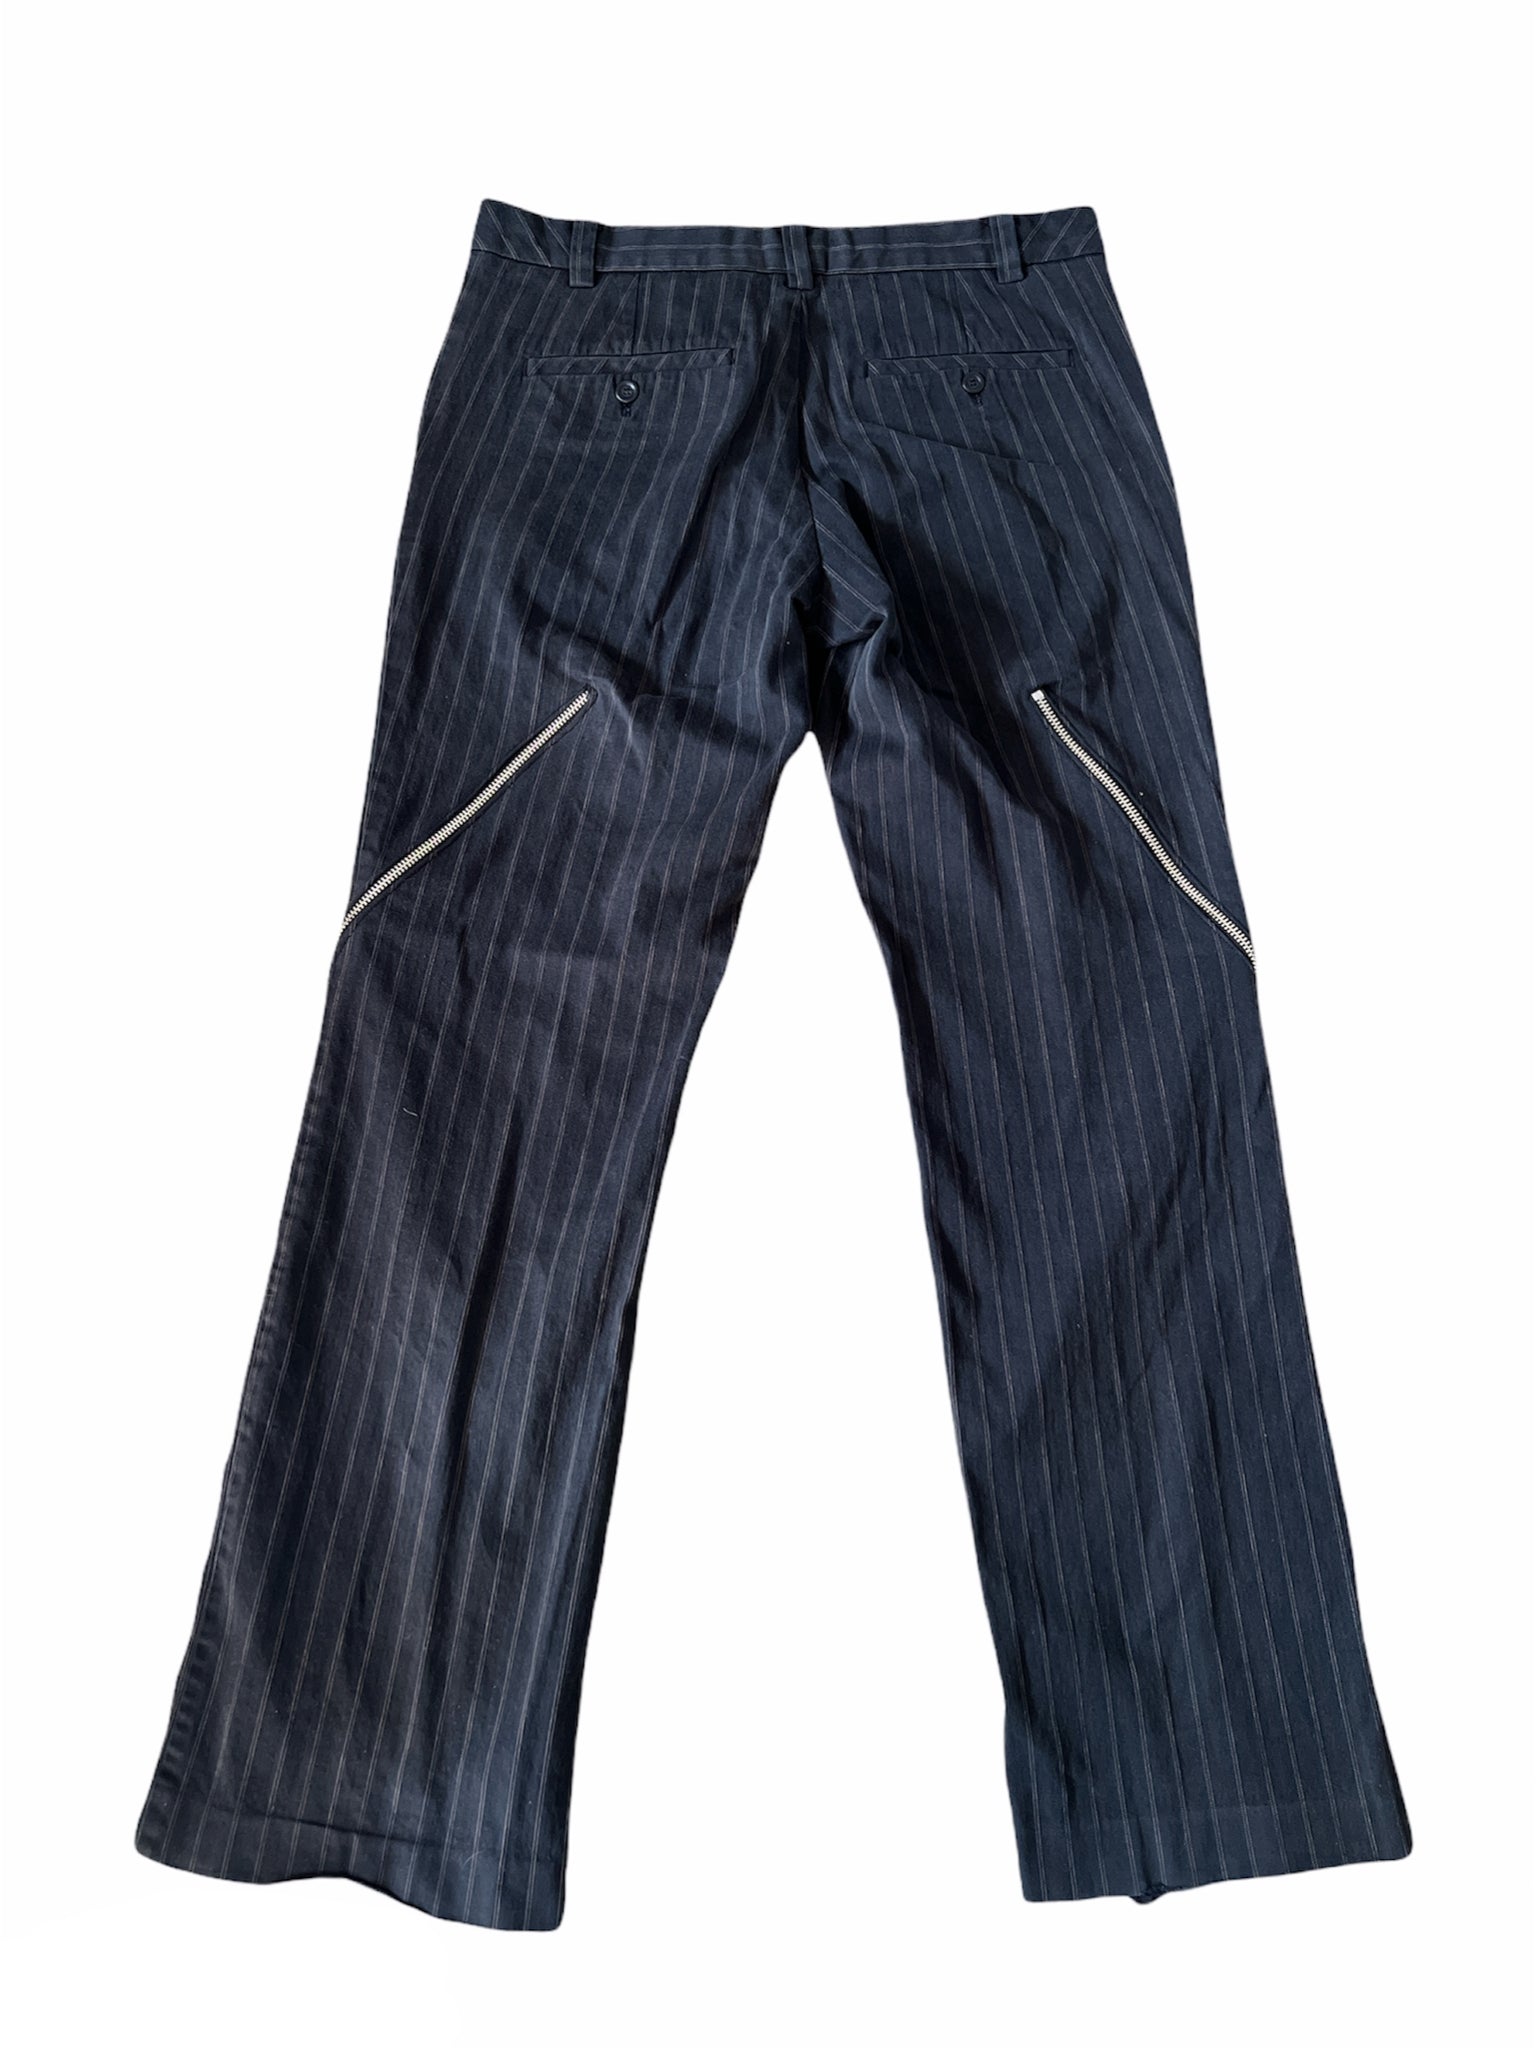 Mountain Warehouse Mens Zip Off Trek Trousers Convertible Shorts Walking  Hiking | eBay